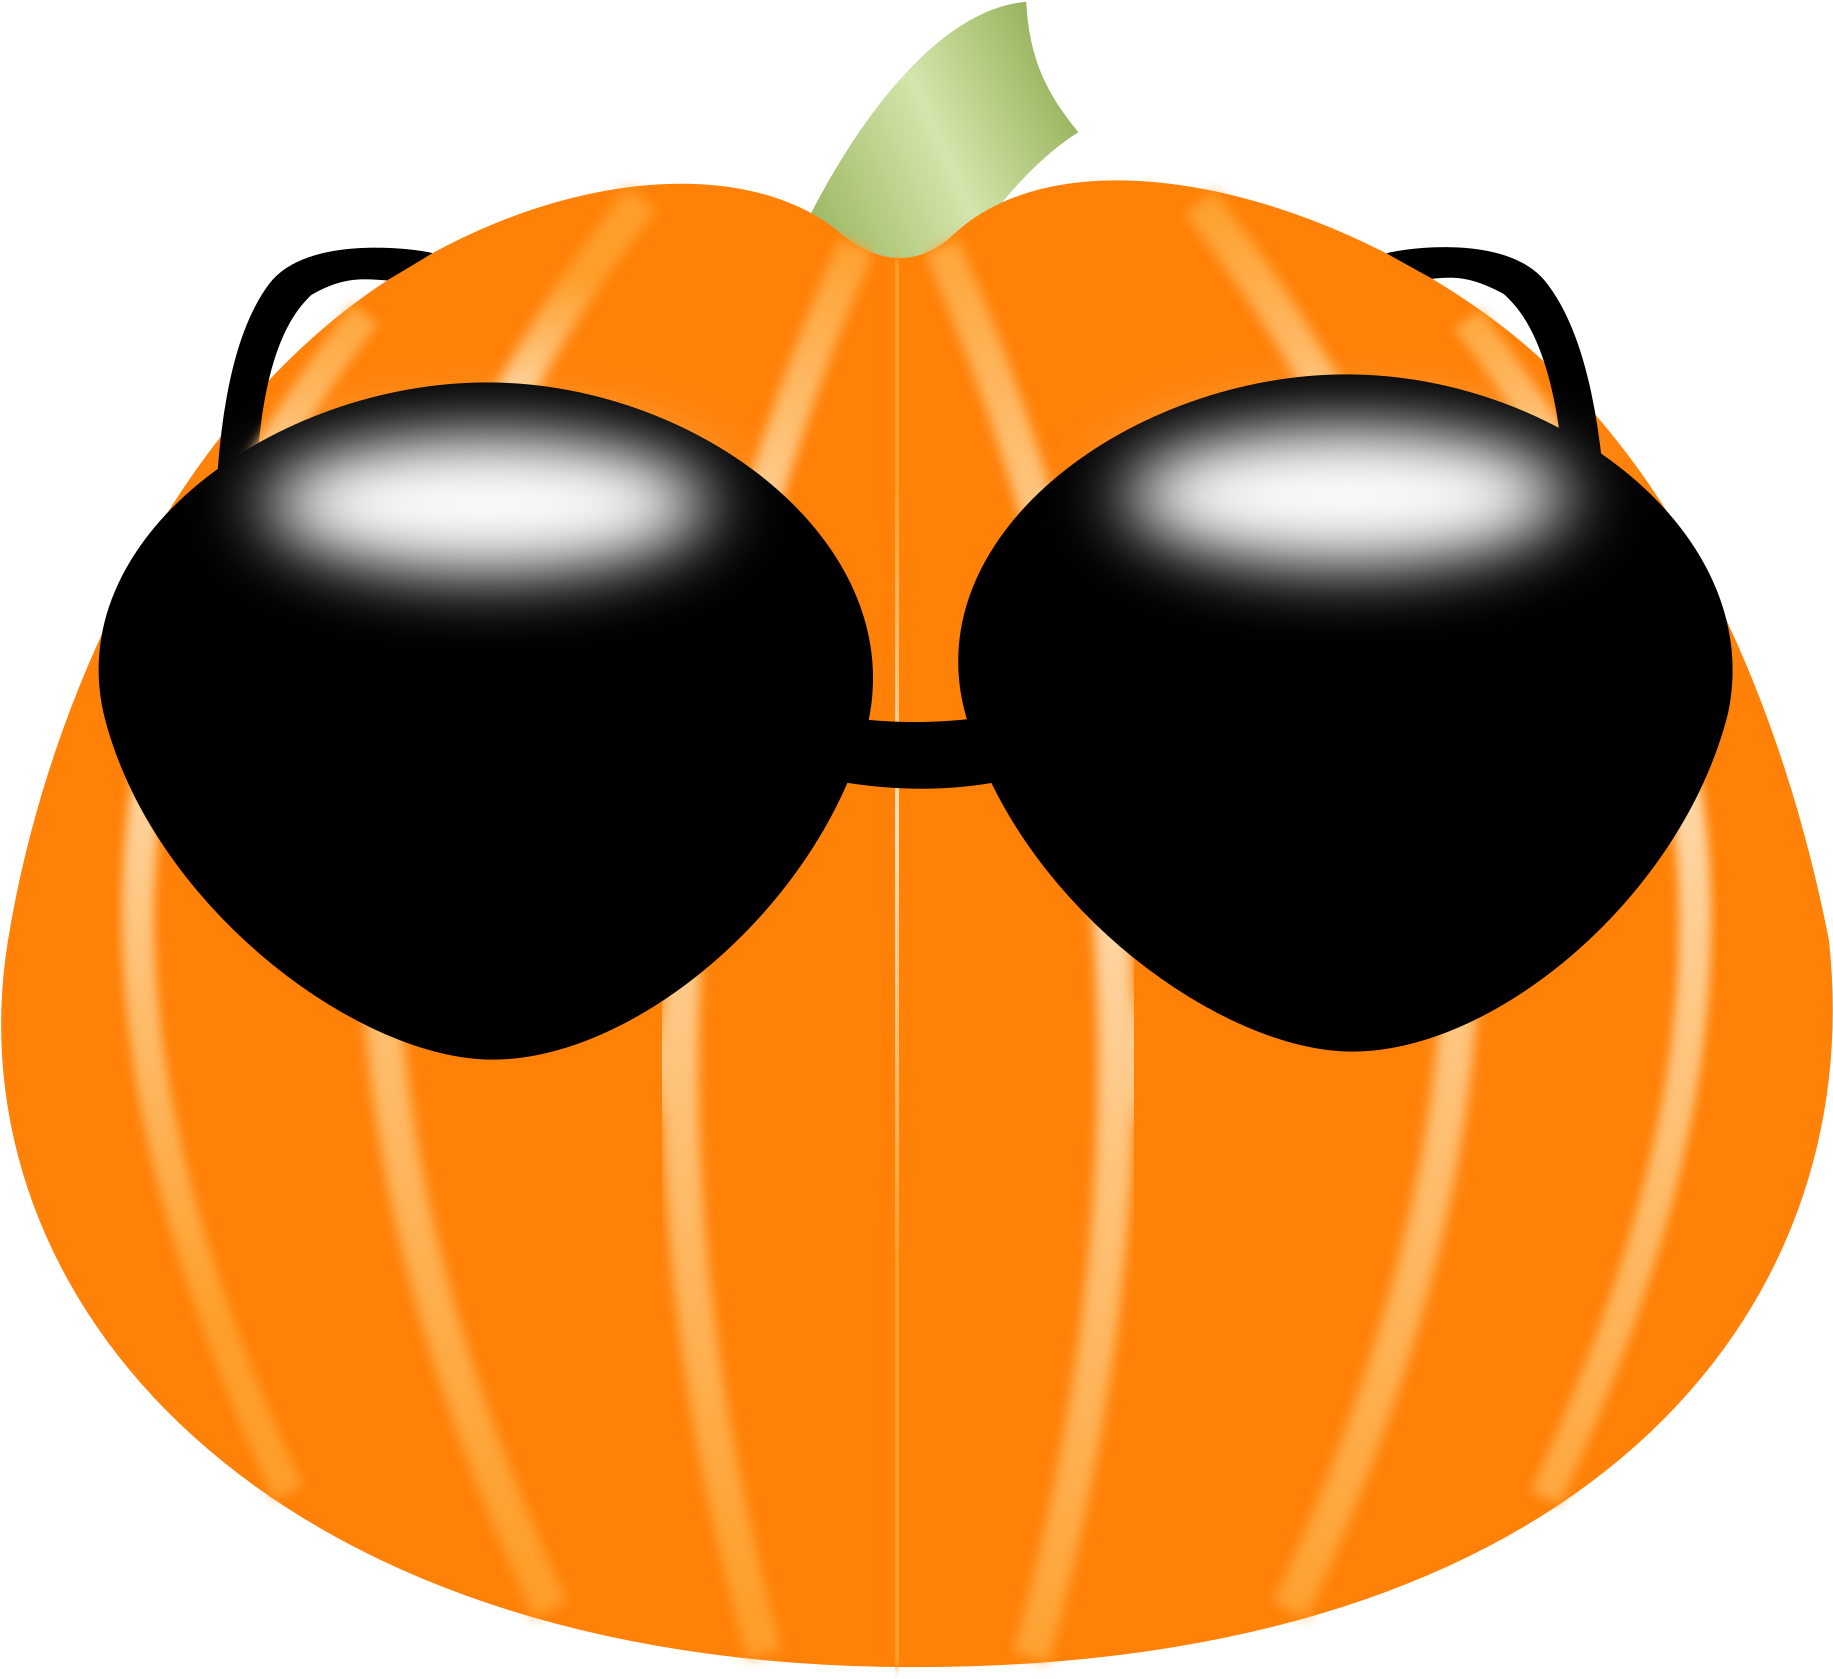 Pumpkin Wearing Sunglasses - Fruit Wearing Sunglasses Clip Art (2400x1697)